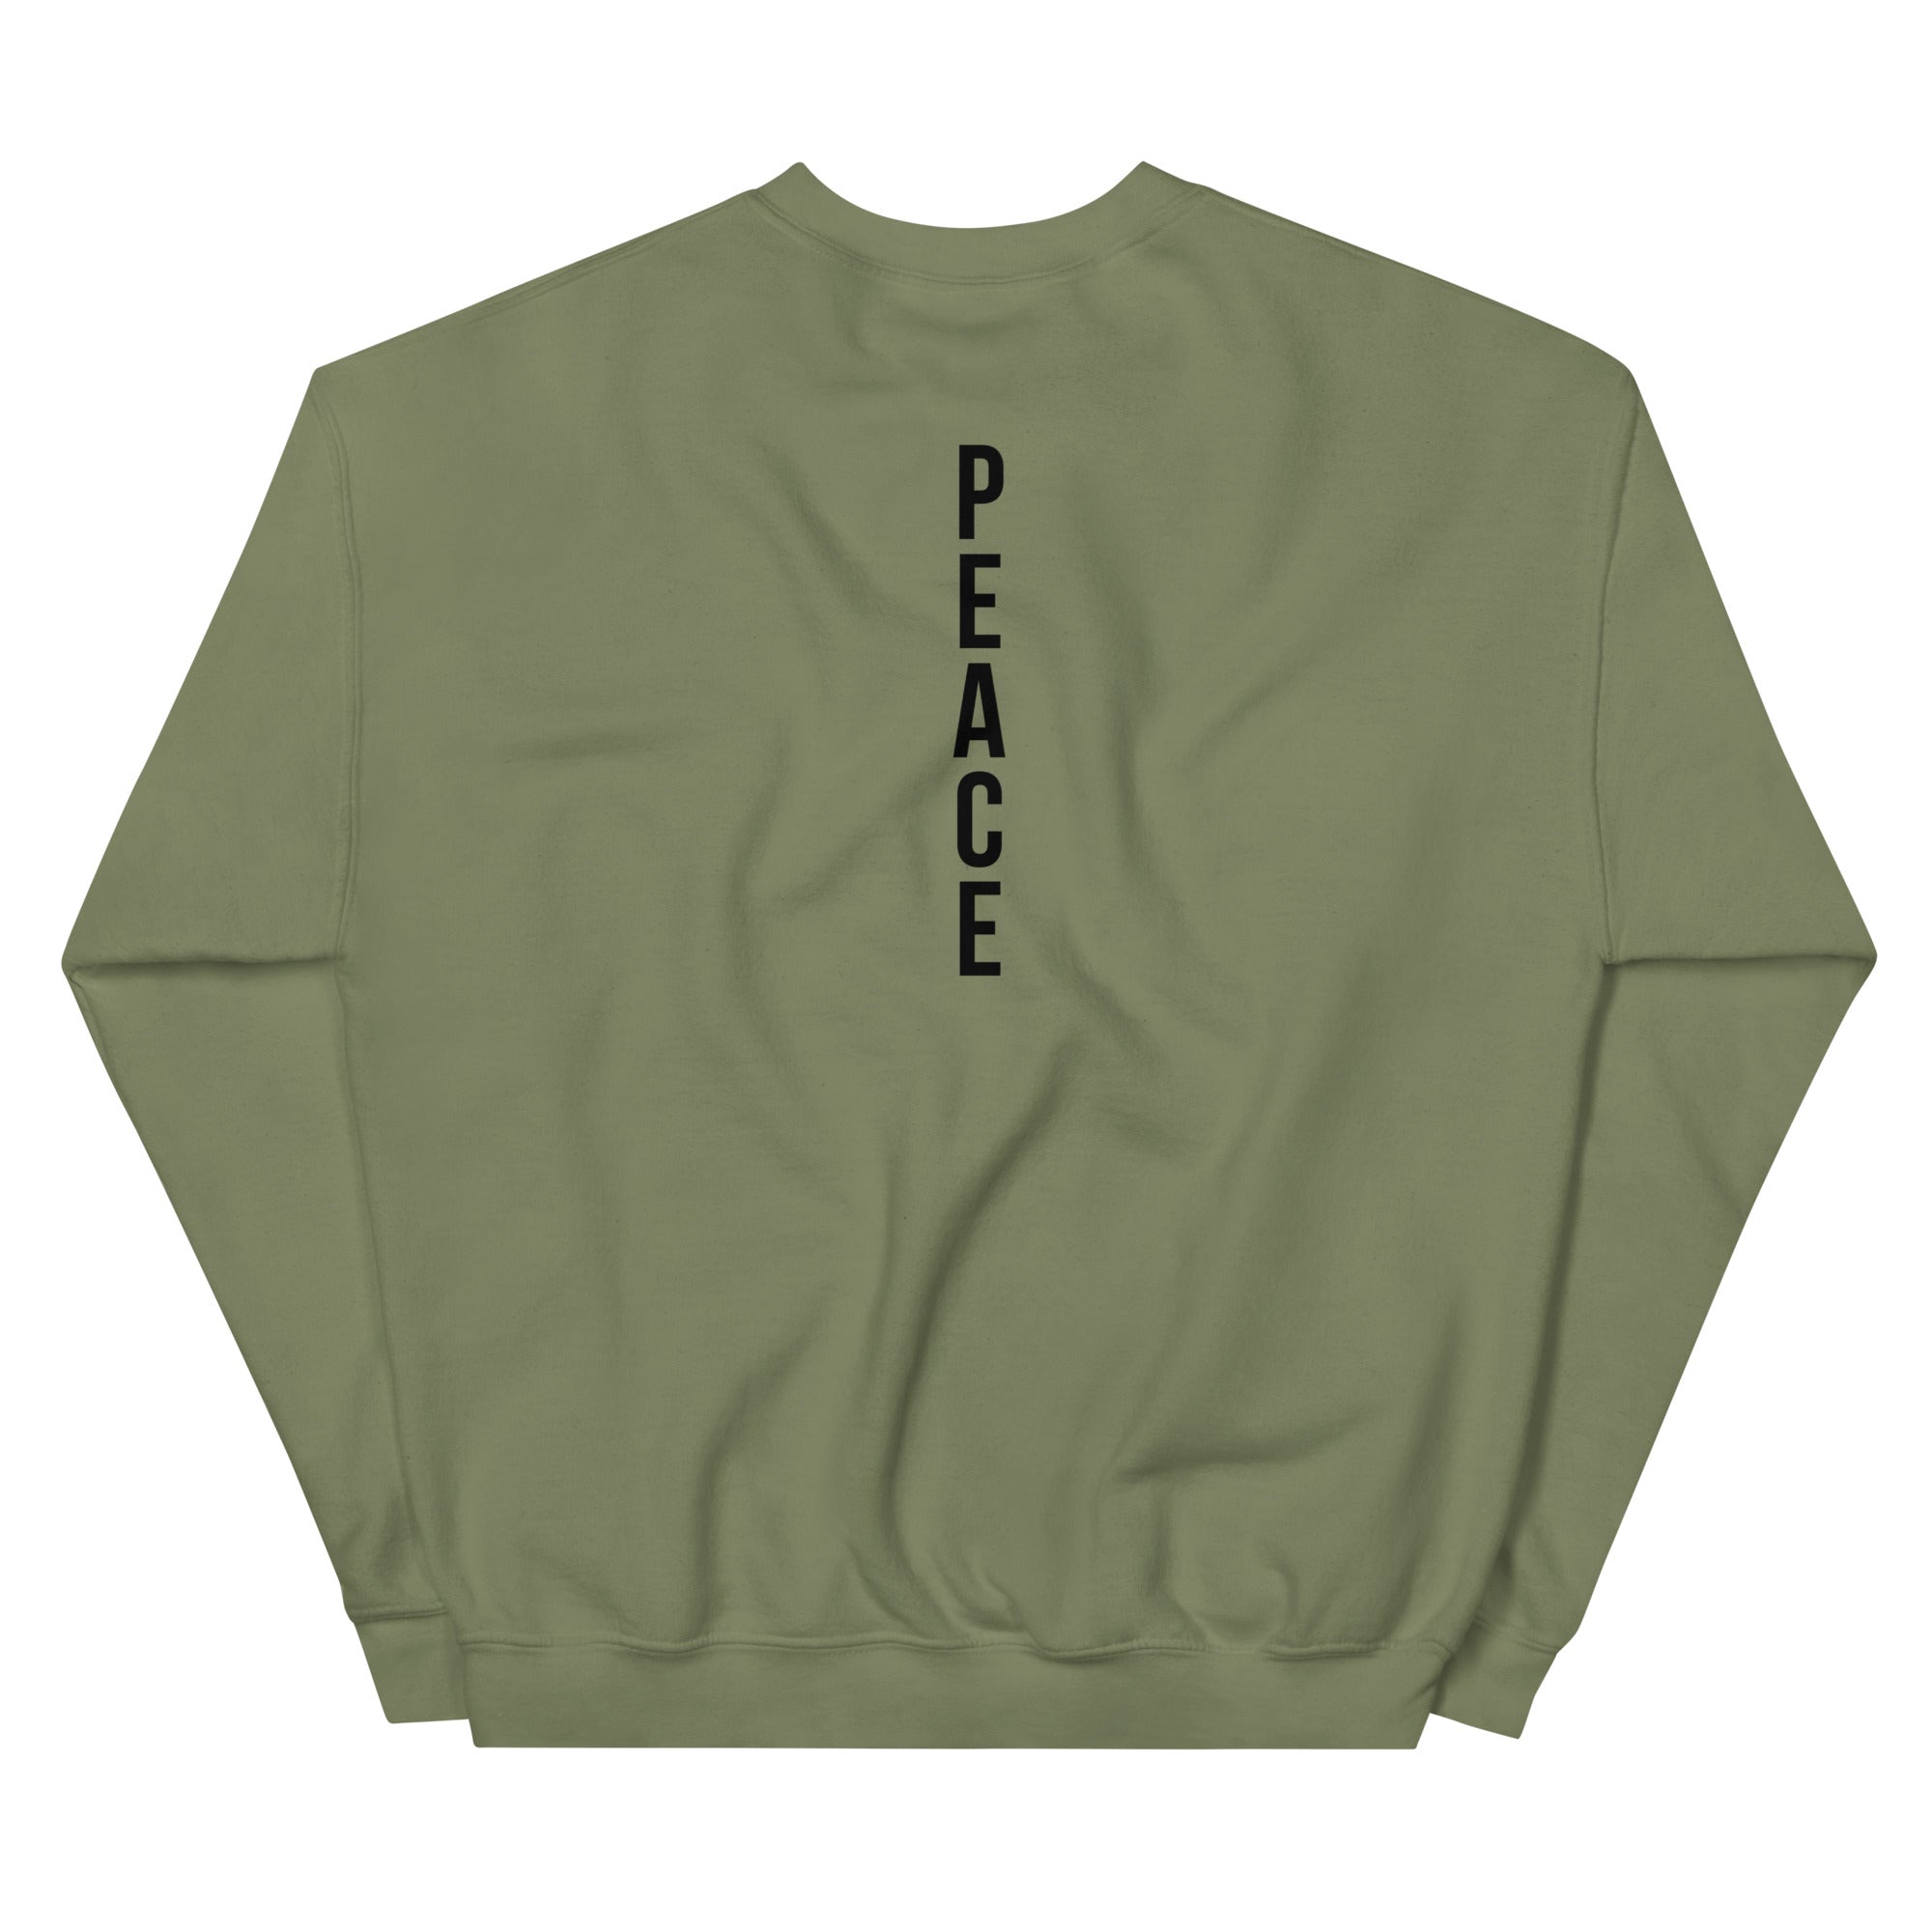 Unisex Sweatshirt My Peace is Non-Negotiable